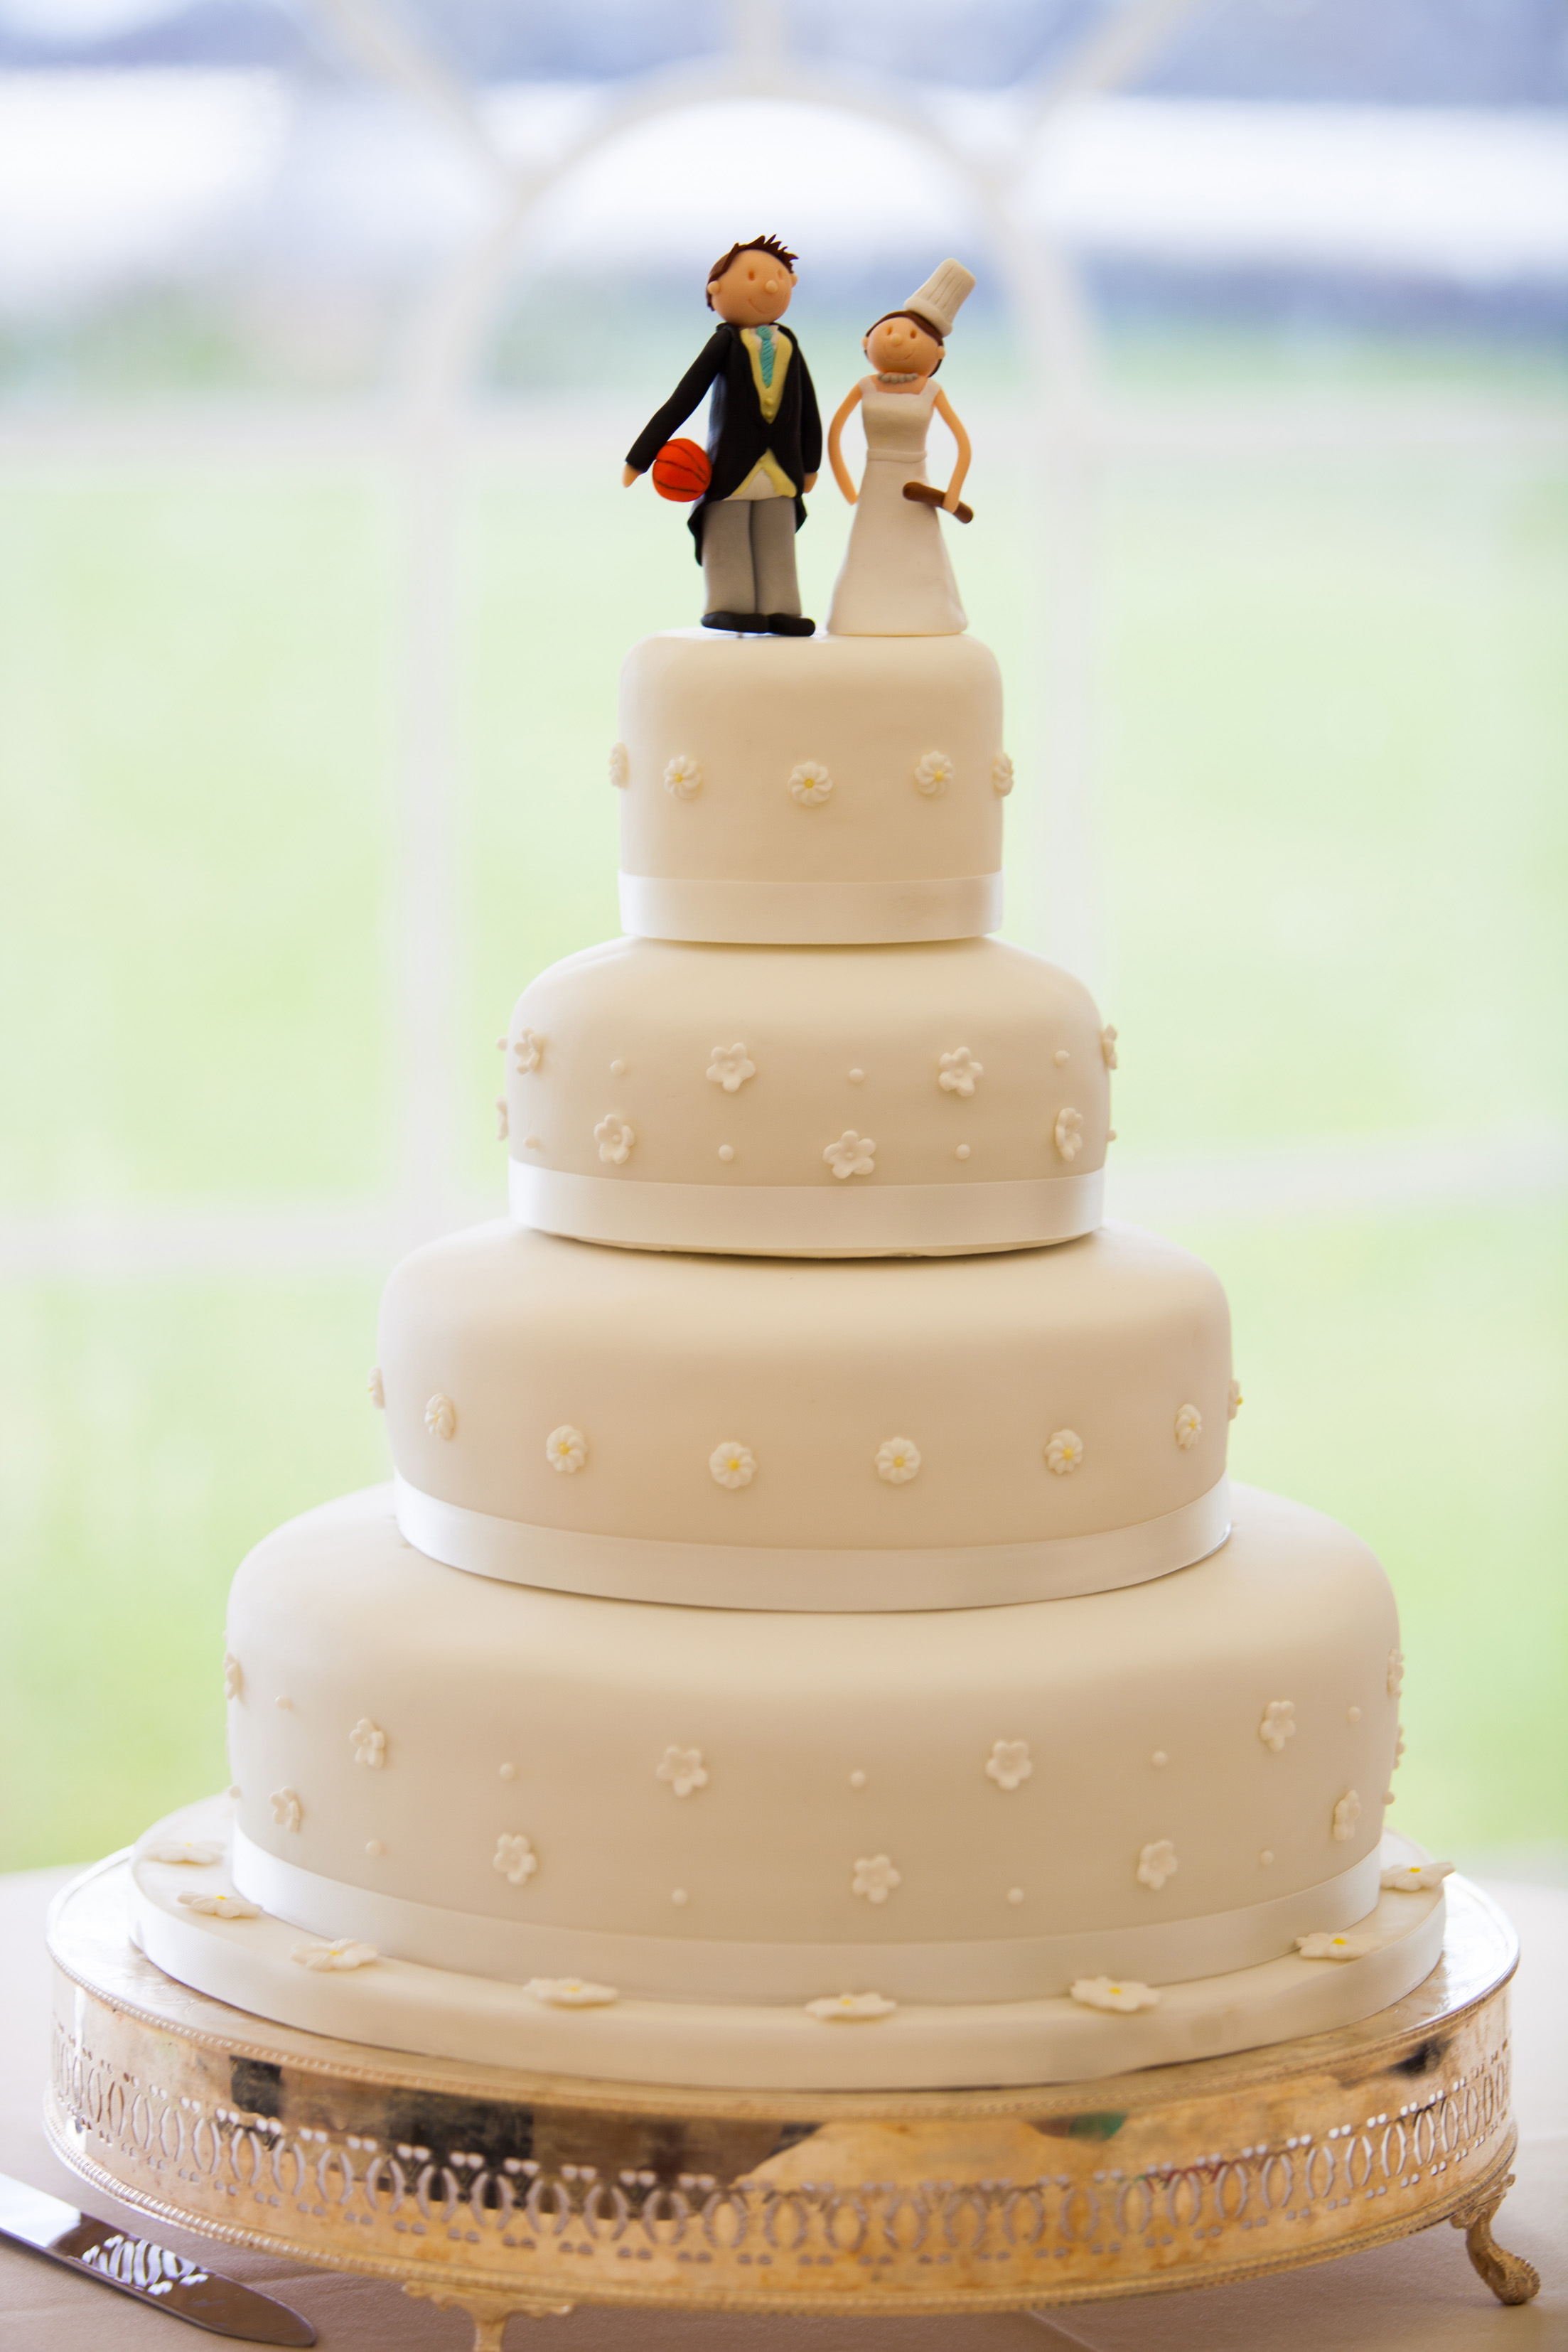 Hummingbird bakery wedding cakes cost